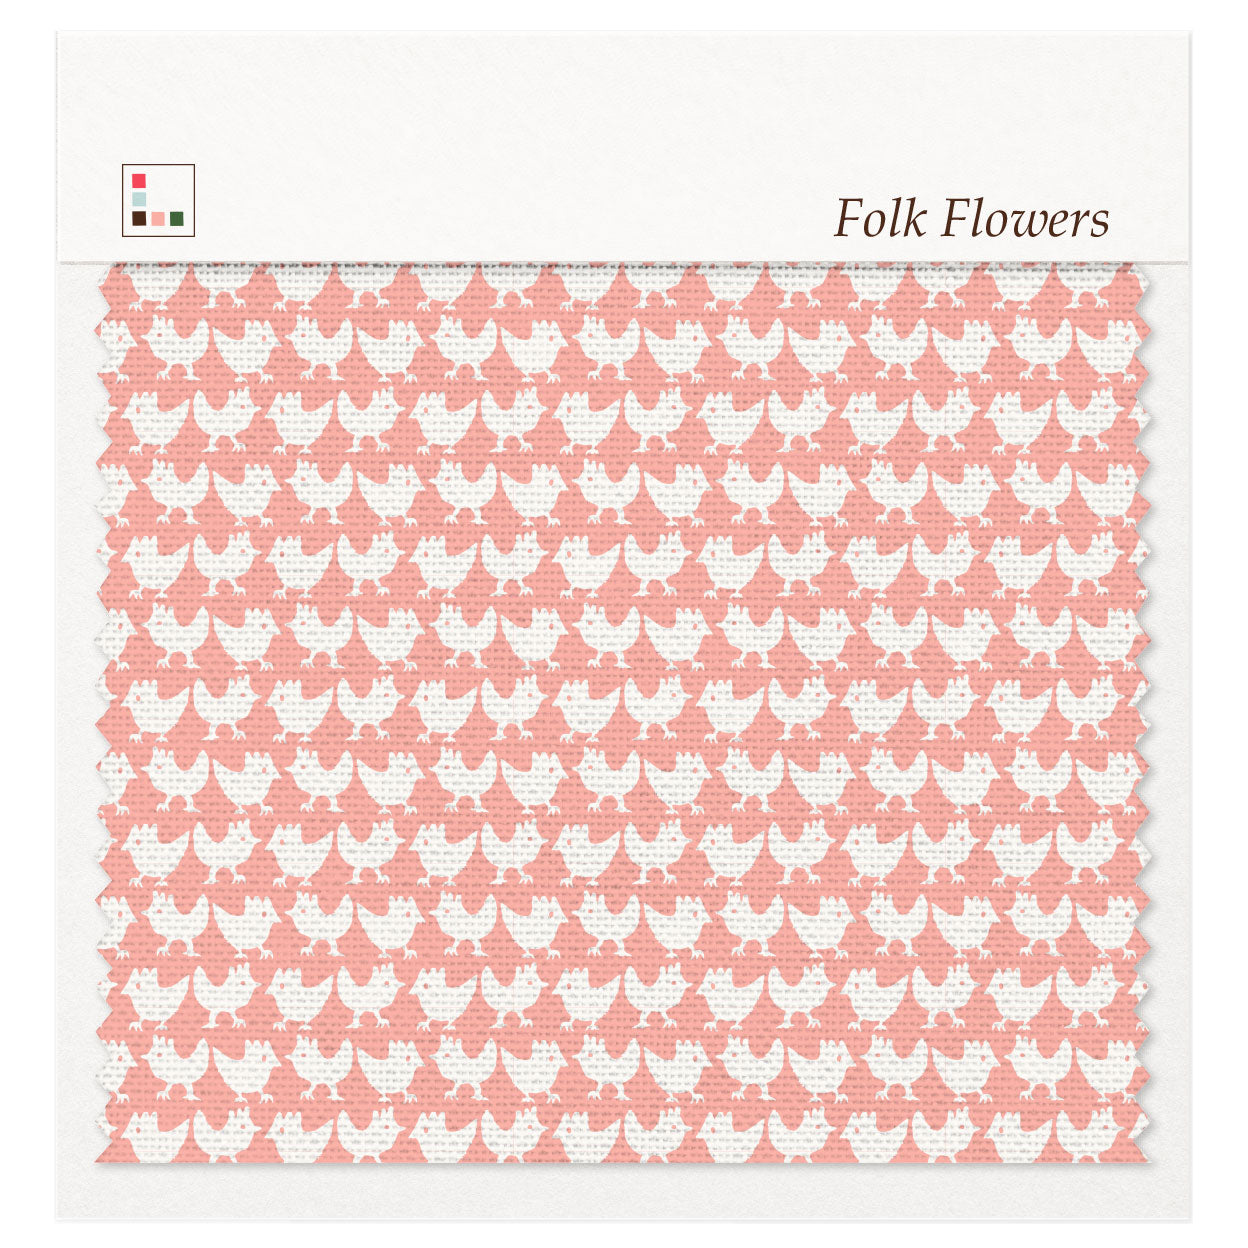 Five Patch Design Folk Flowers fabric swatch